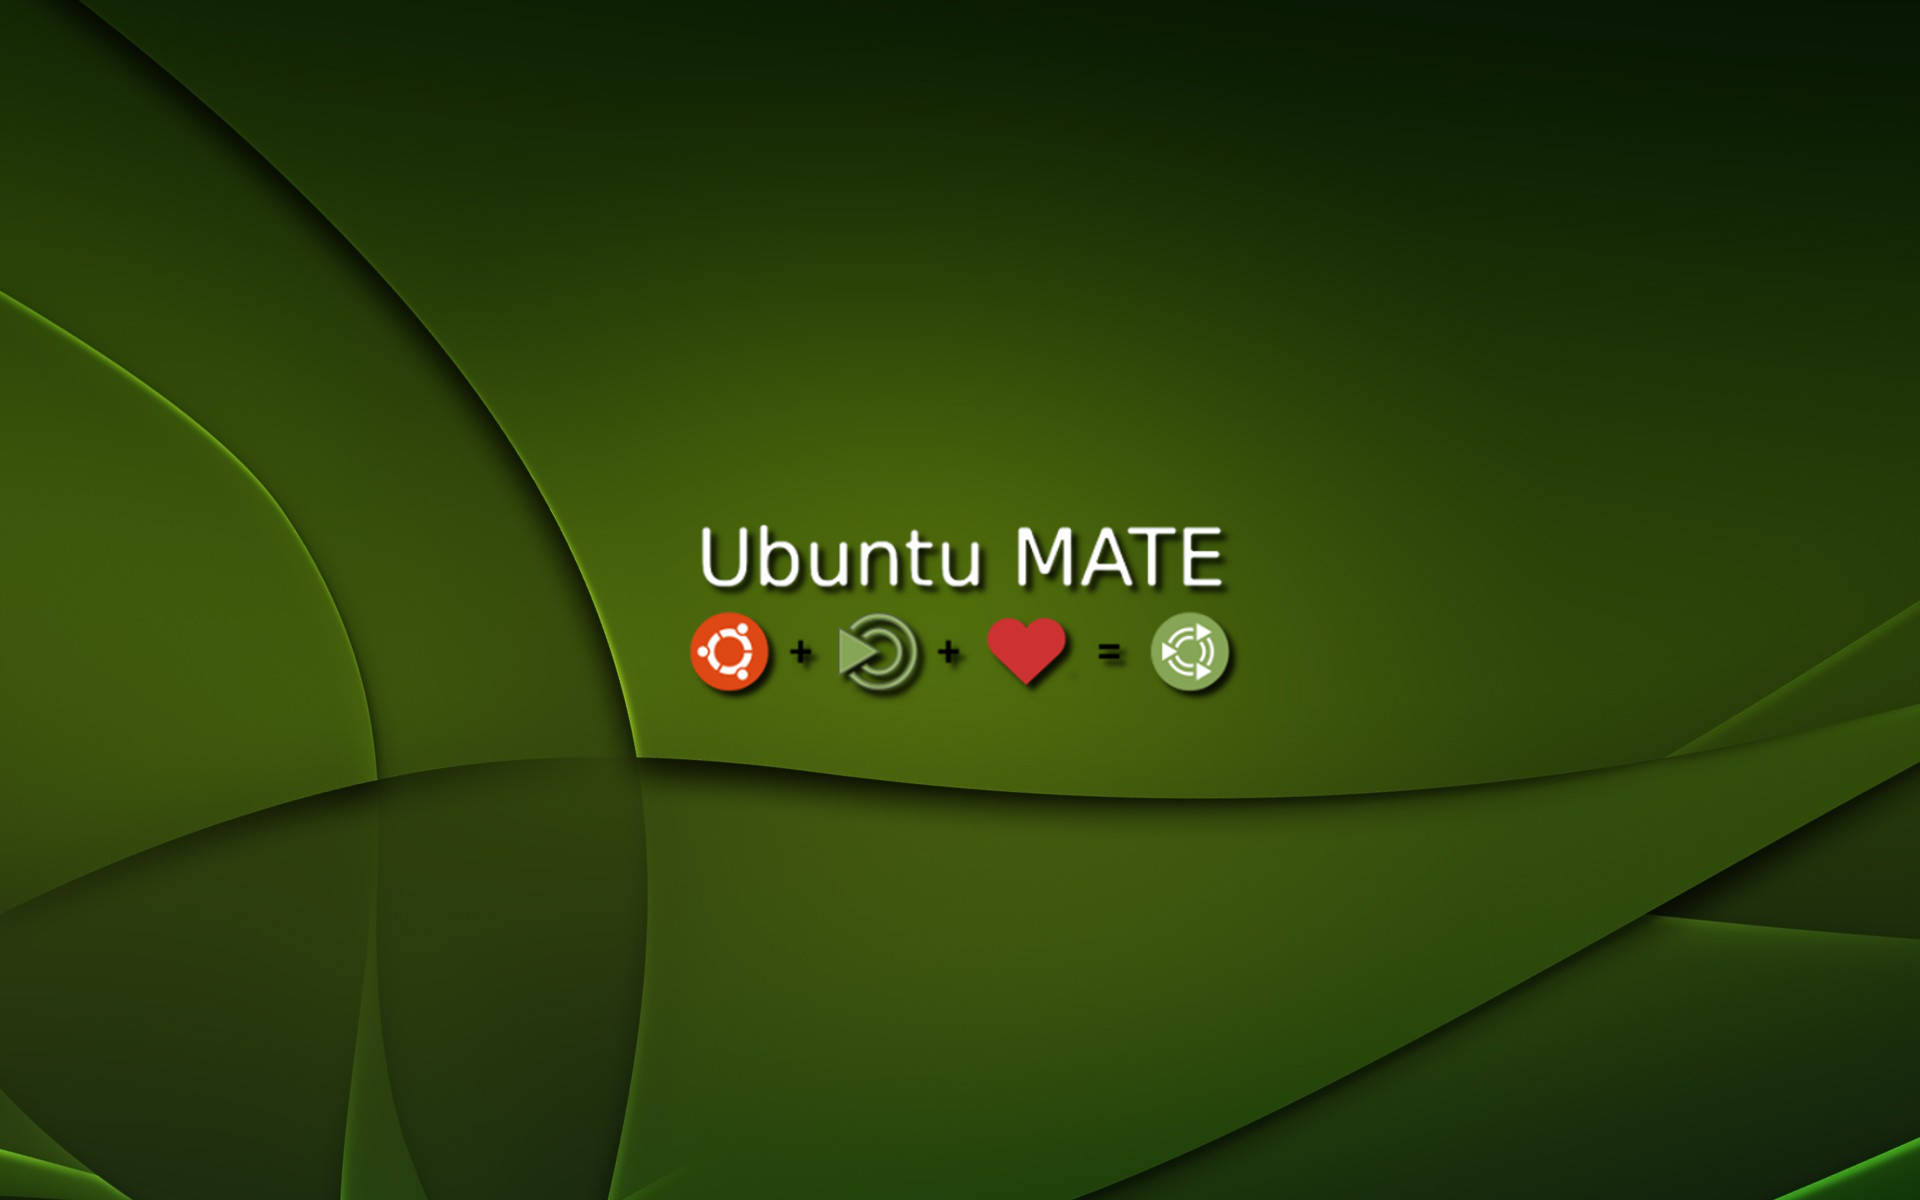 Linux Os Ubuntu Mate Green Wallpaper